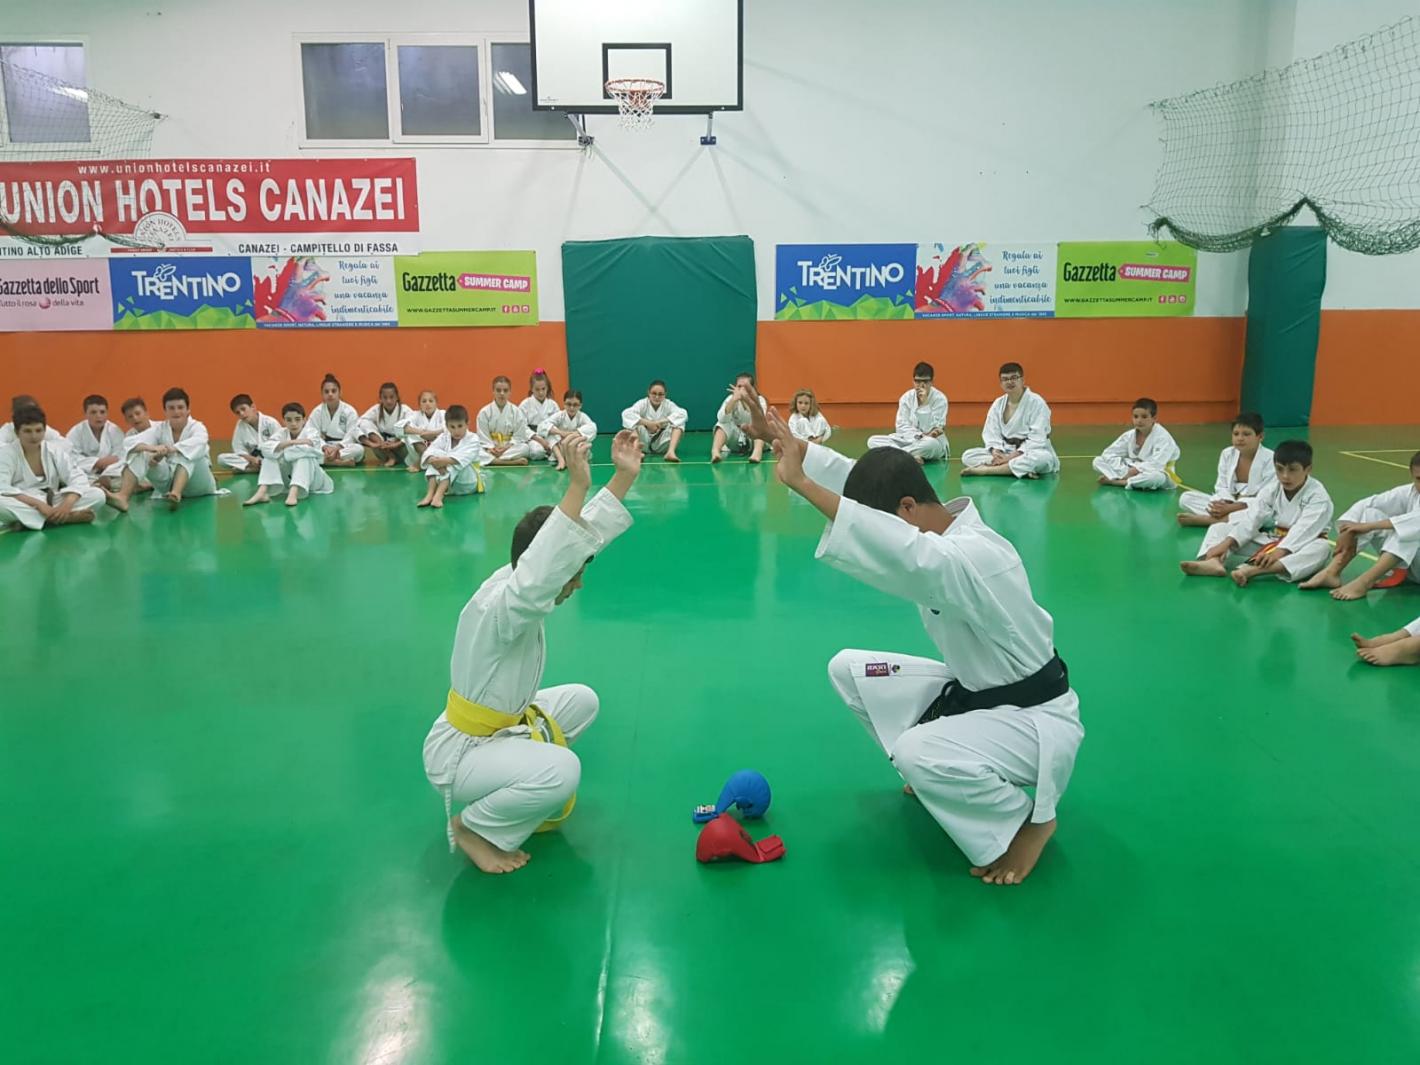 images/friuli_venezia_giulia/large/medium/karate_summer_camp_2019.jpeg